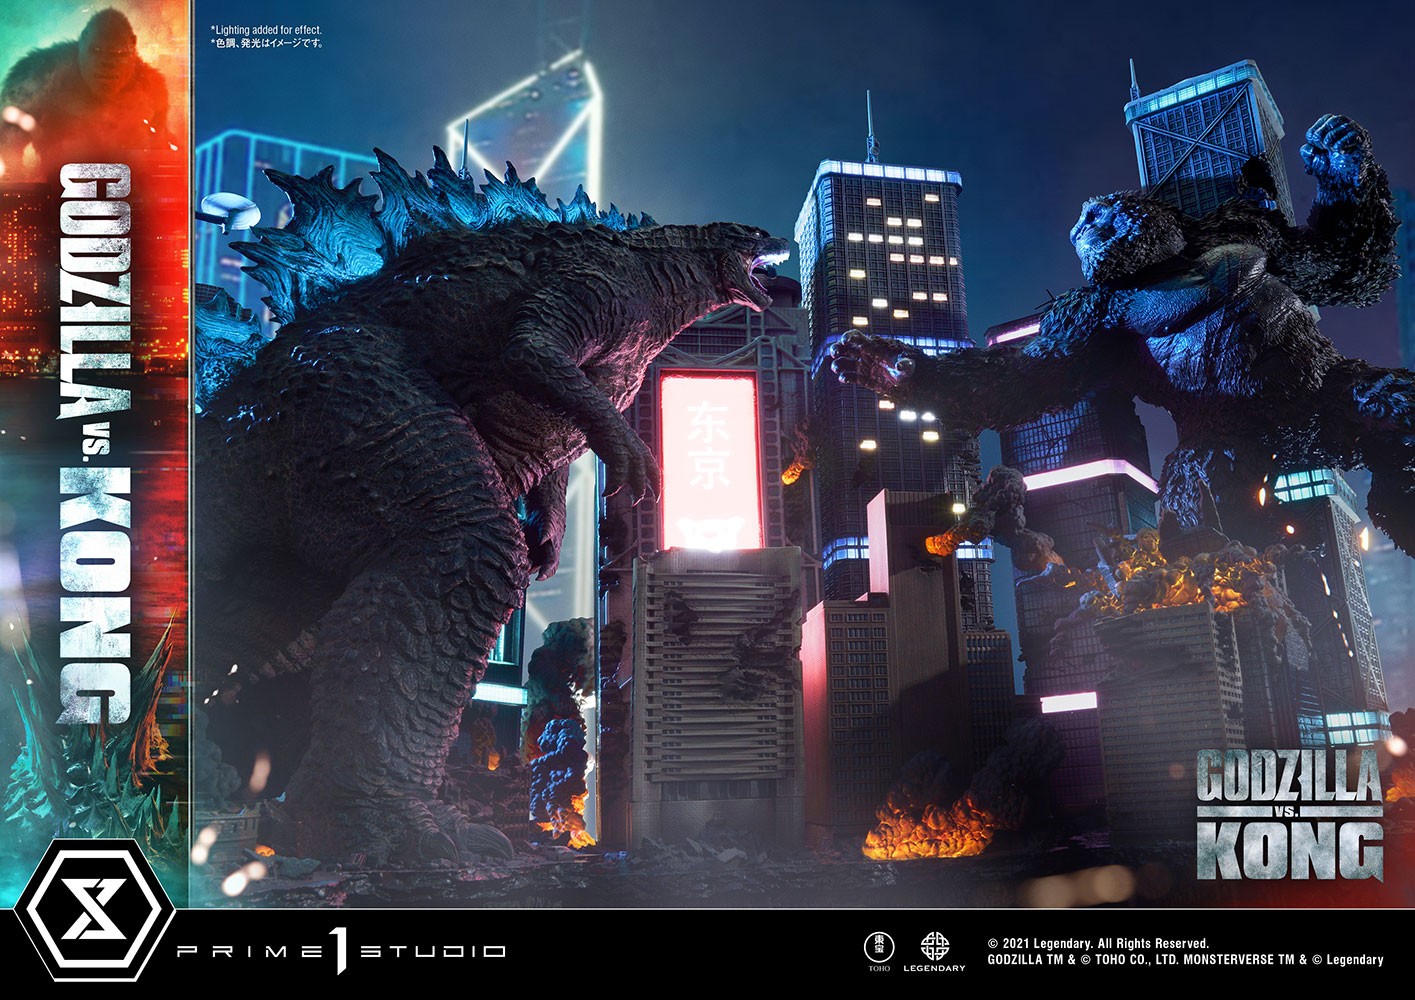 Godzilla vs Kong Final Battle (Prototype Shown) View 30